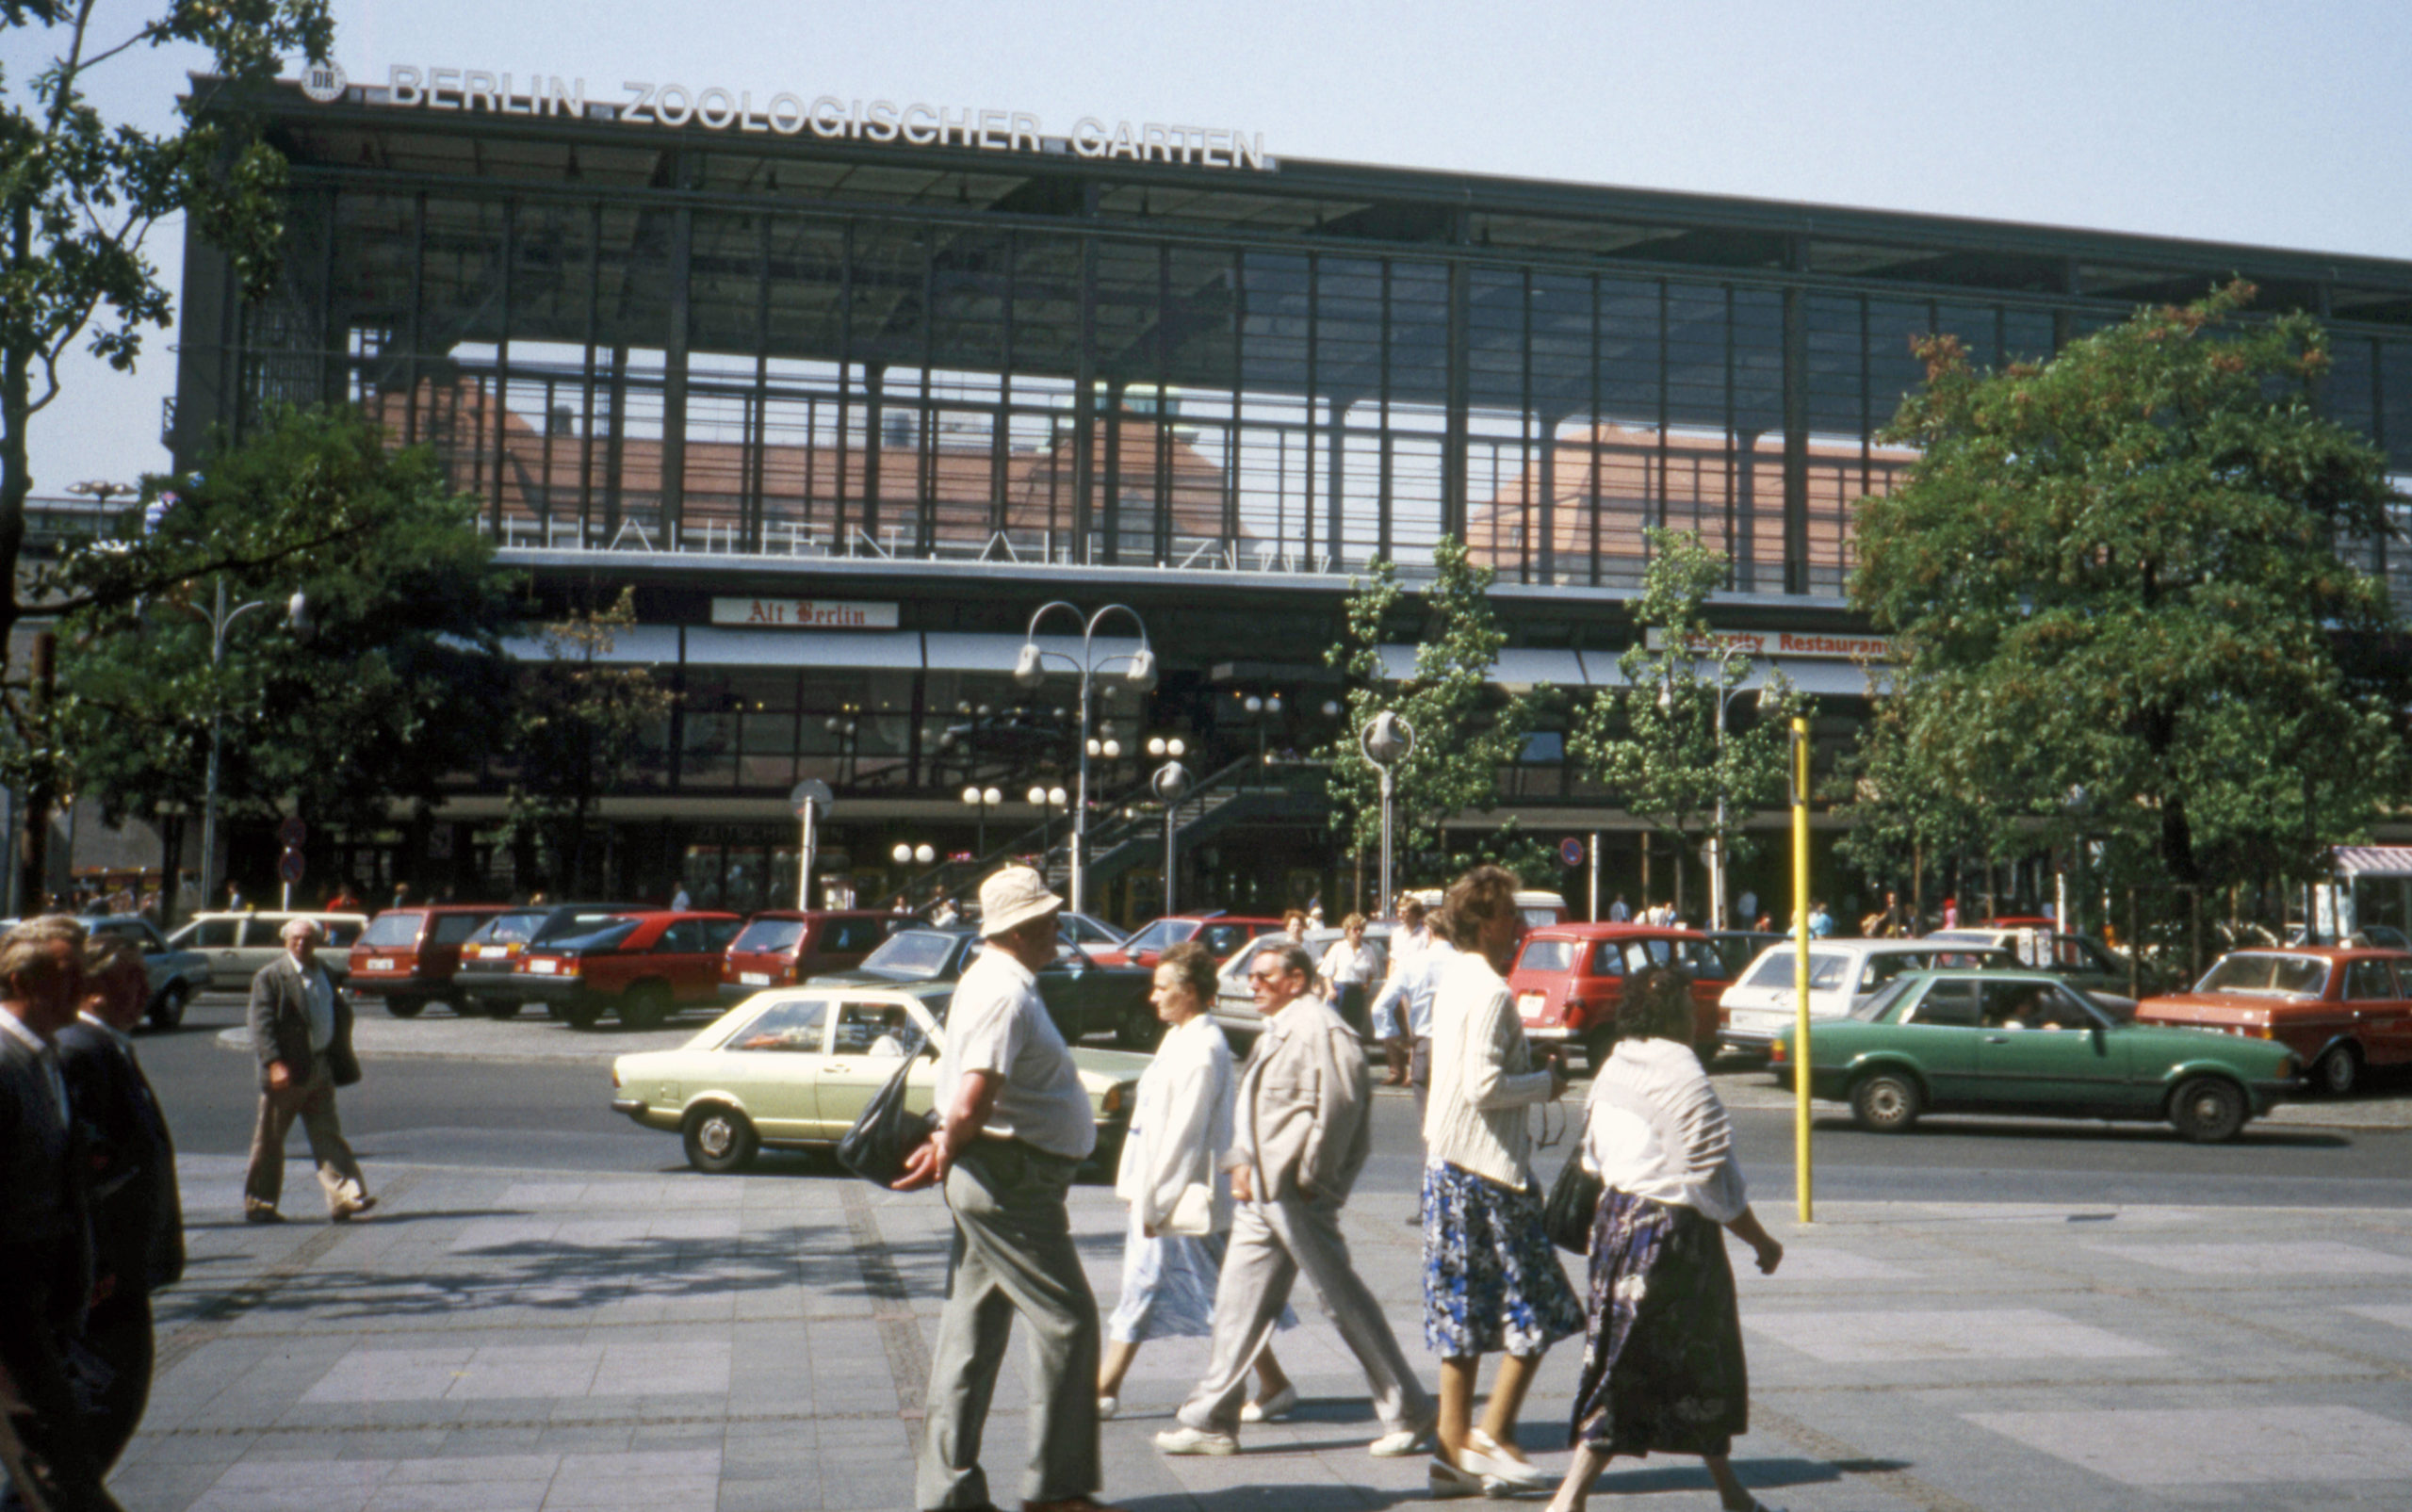 Passanten vor dem Bahnhof Zoologischer Garten. Foto: Imago/Serienlicht